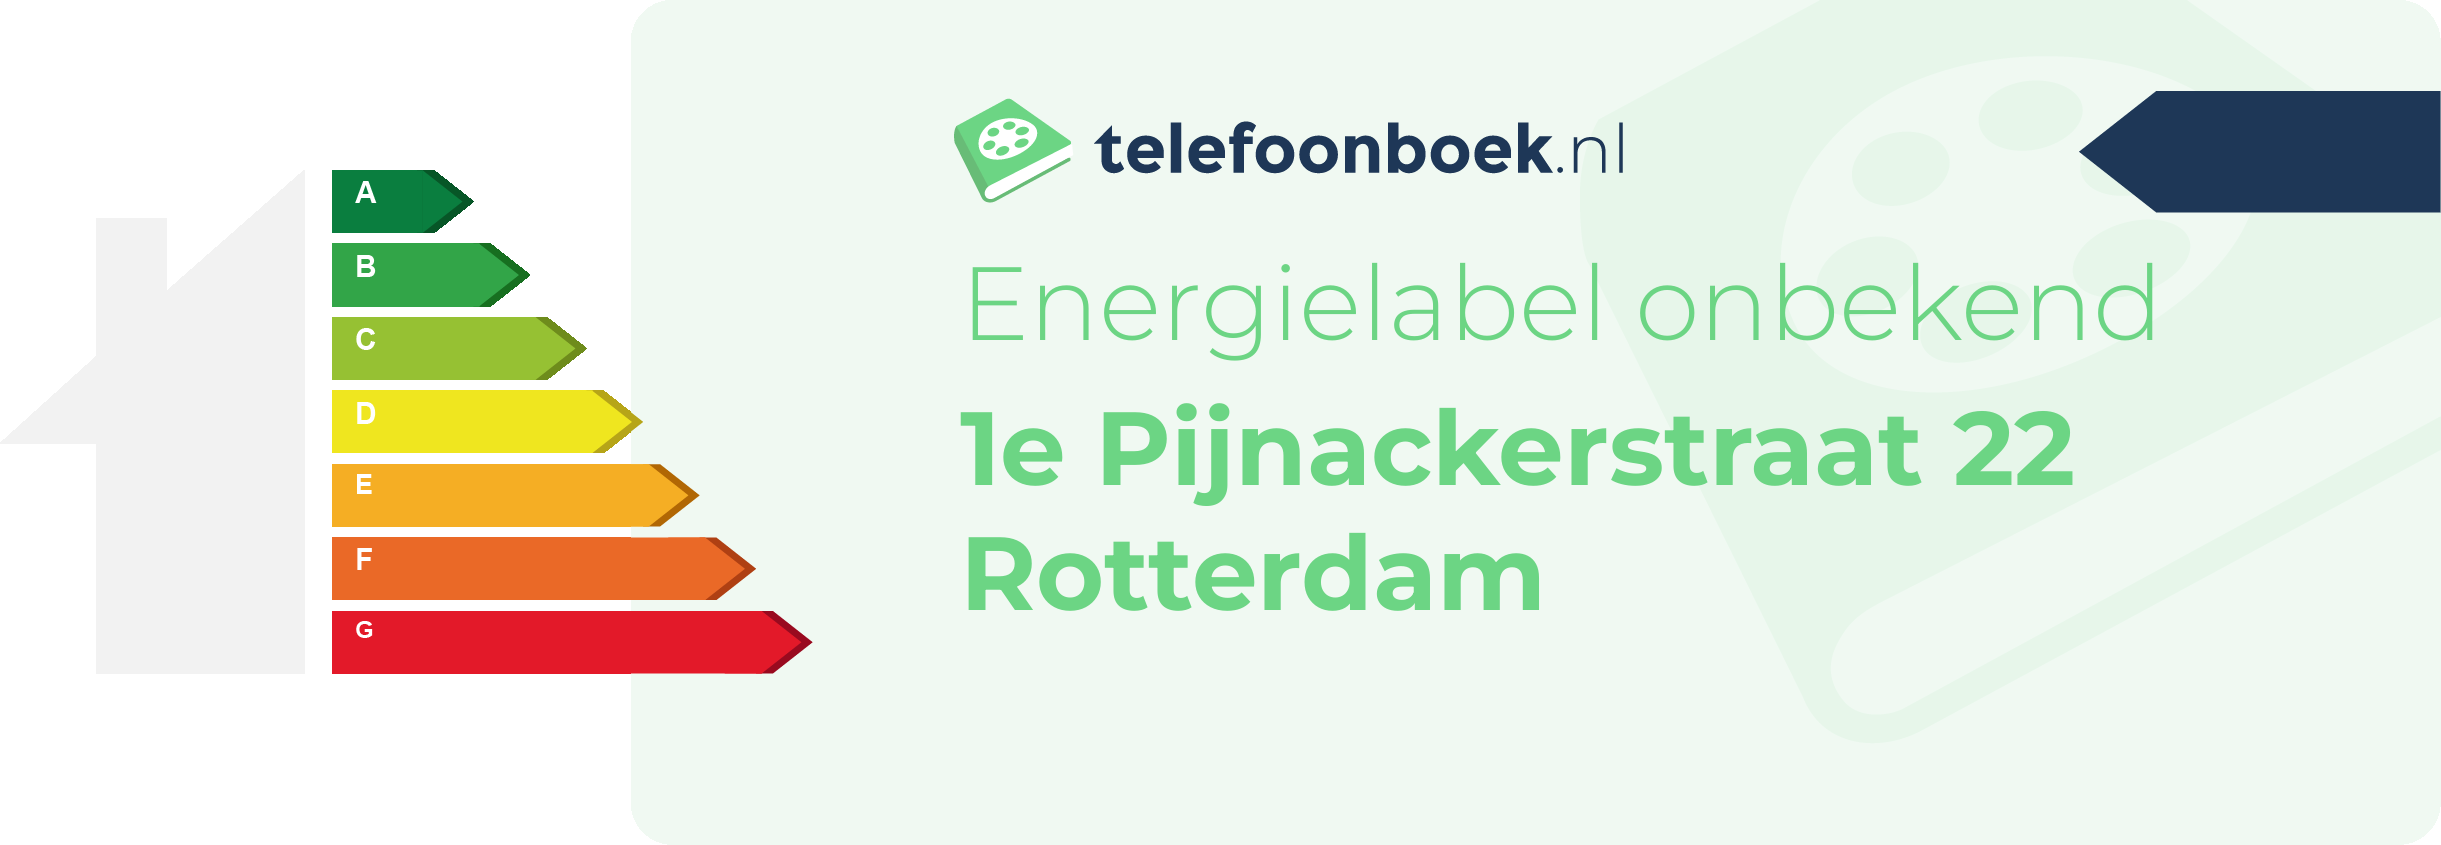 Energielabel 1e Pijnackerstraat 22 Rotterdam